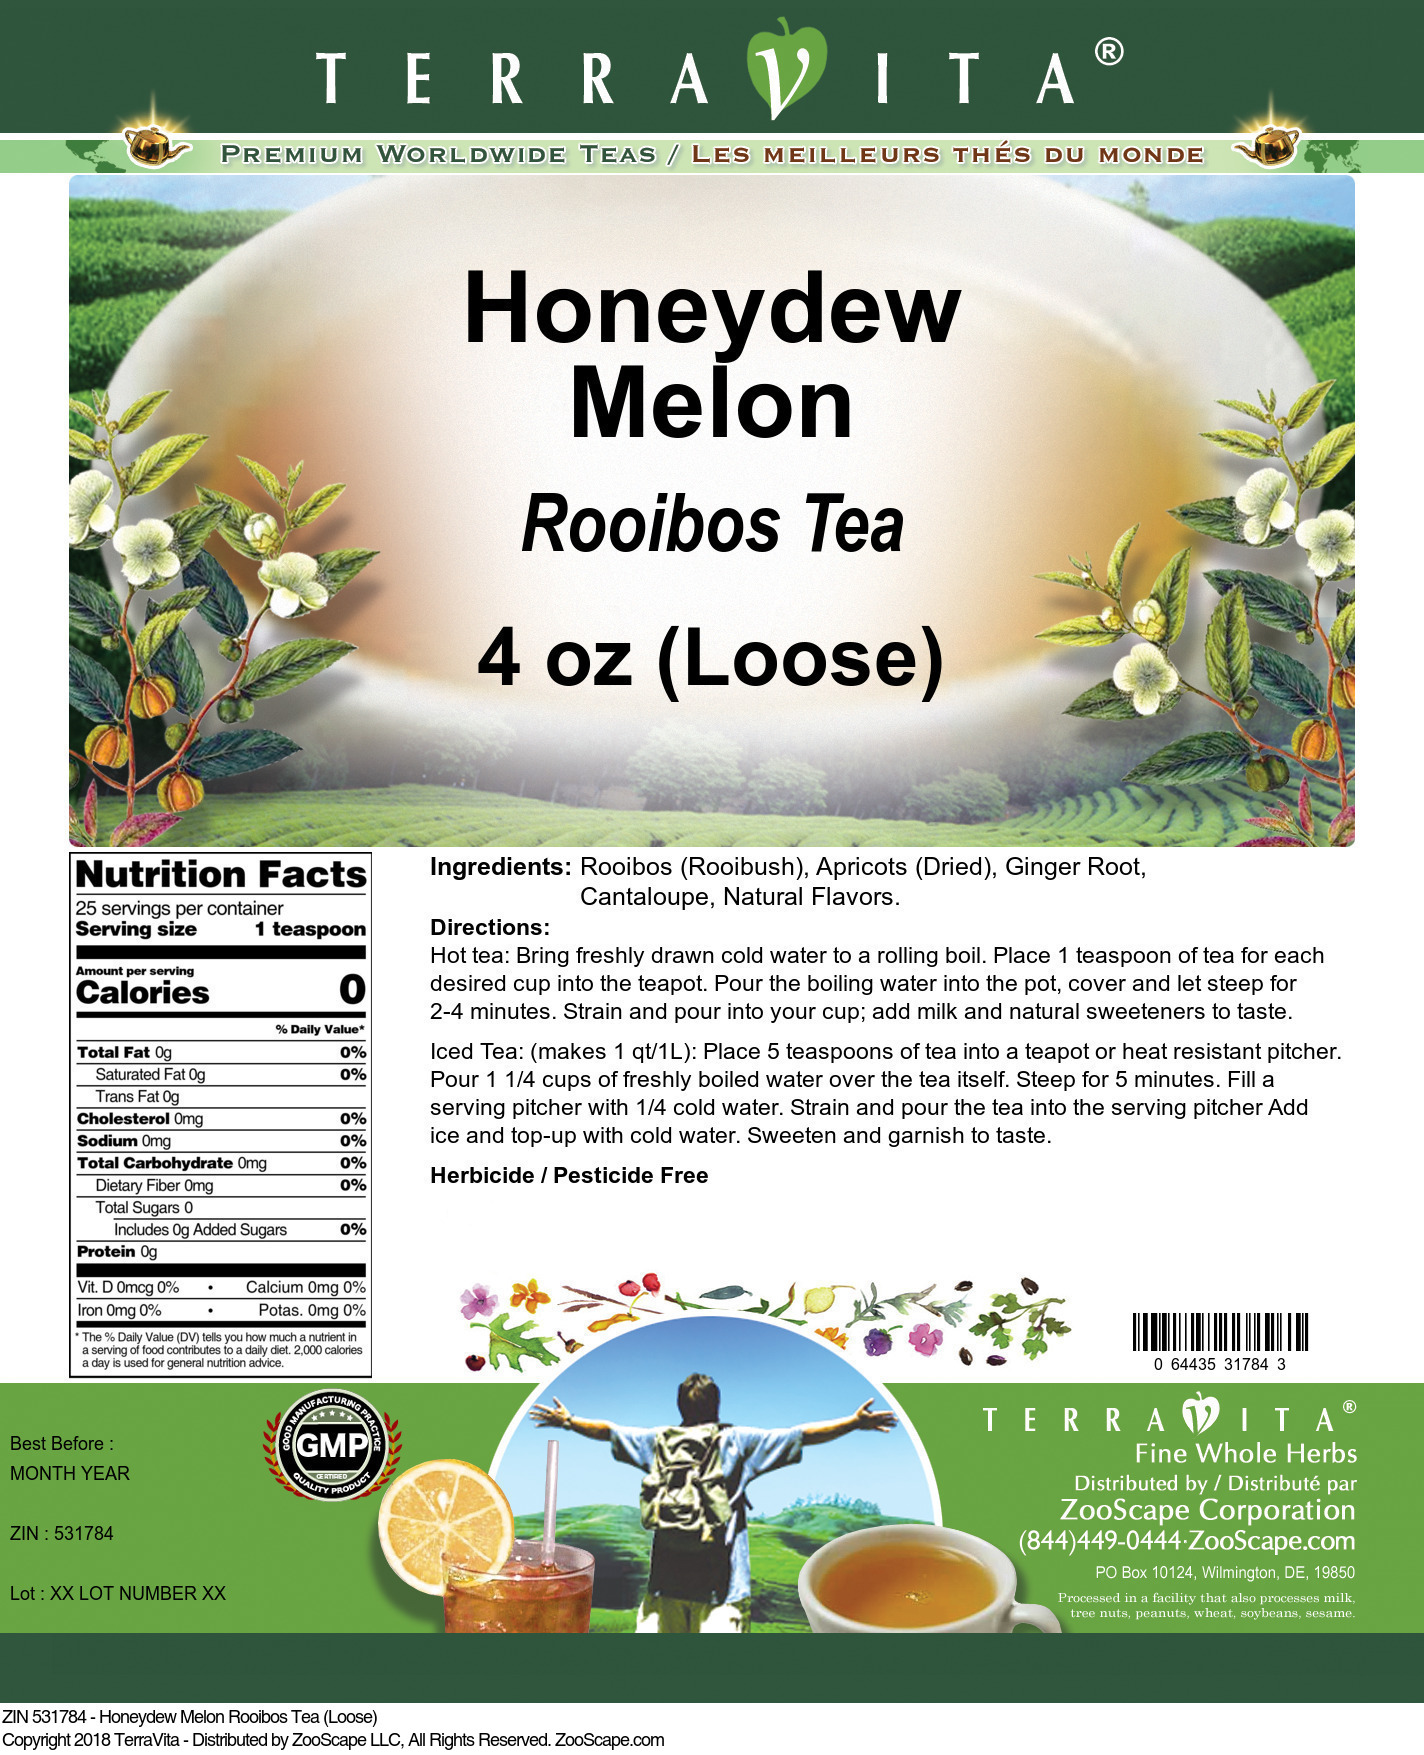 Honeydew Melon Rooibos Tea (Loose) - Label